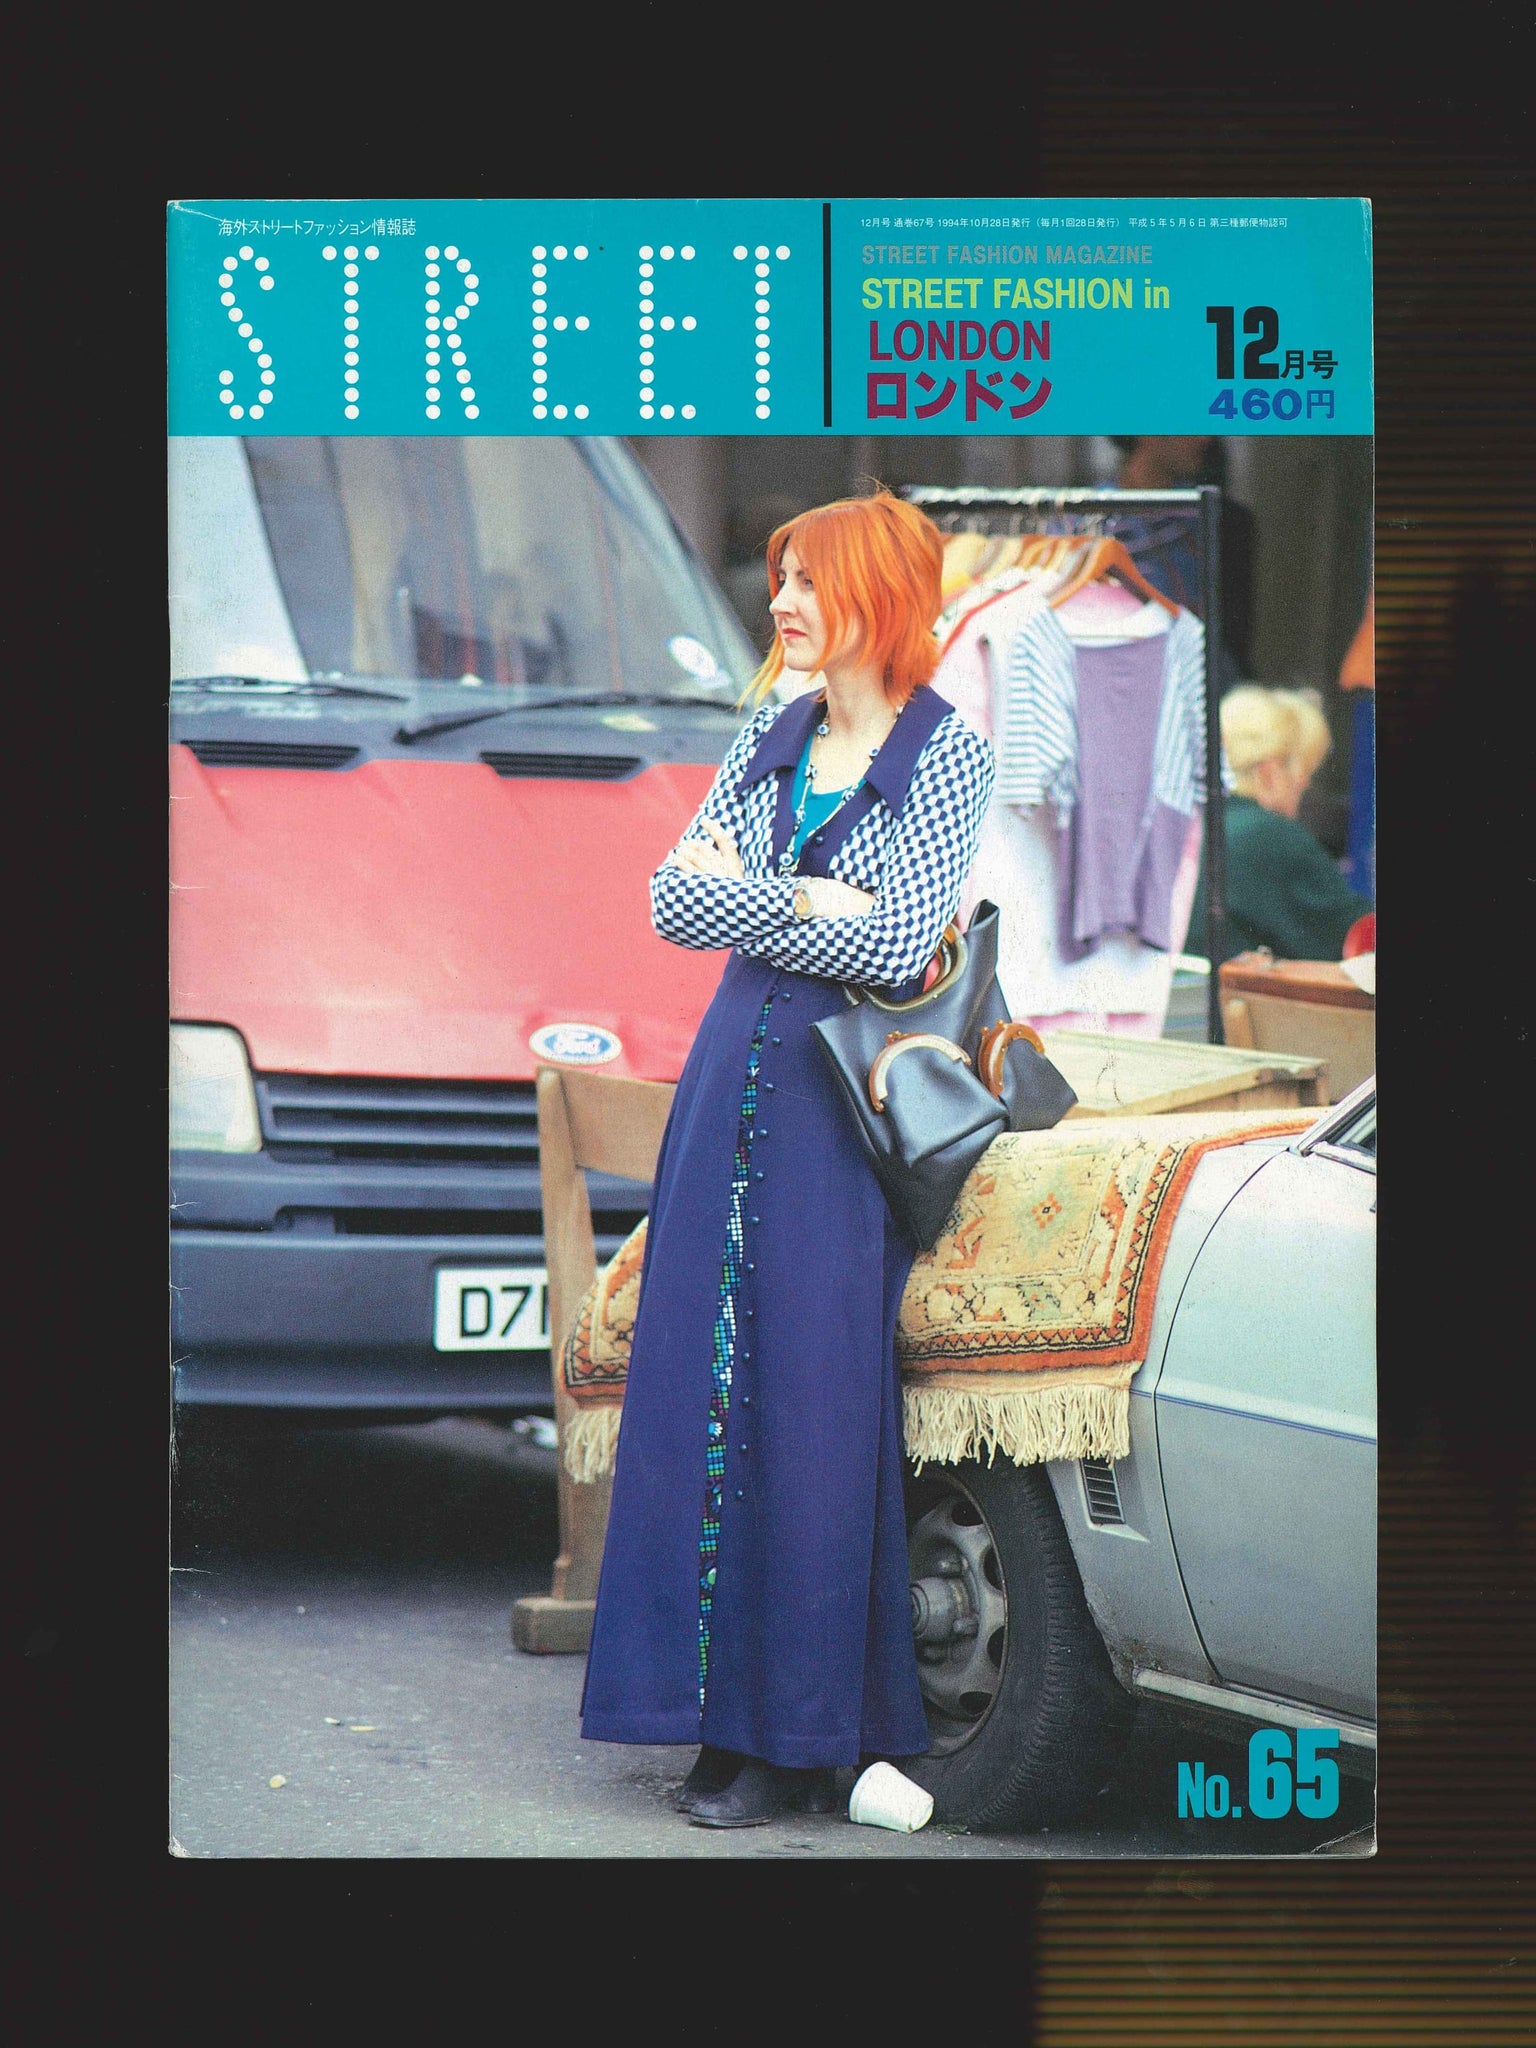 STREET magazine no. 65 / december 1994 / street fashion in london / Shoichi Aoki